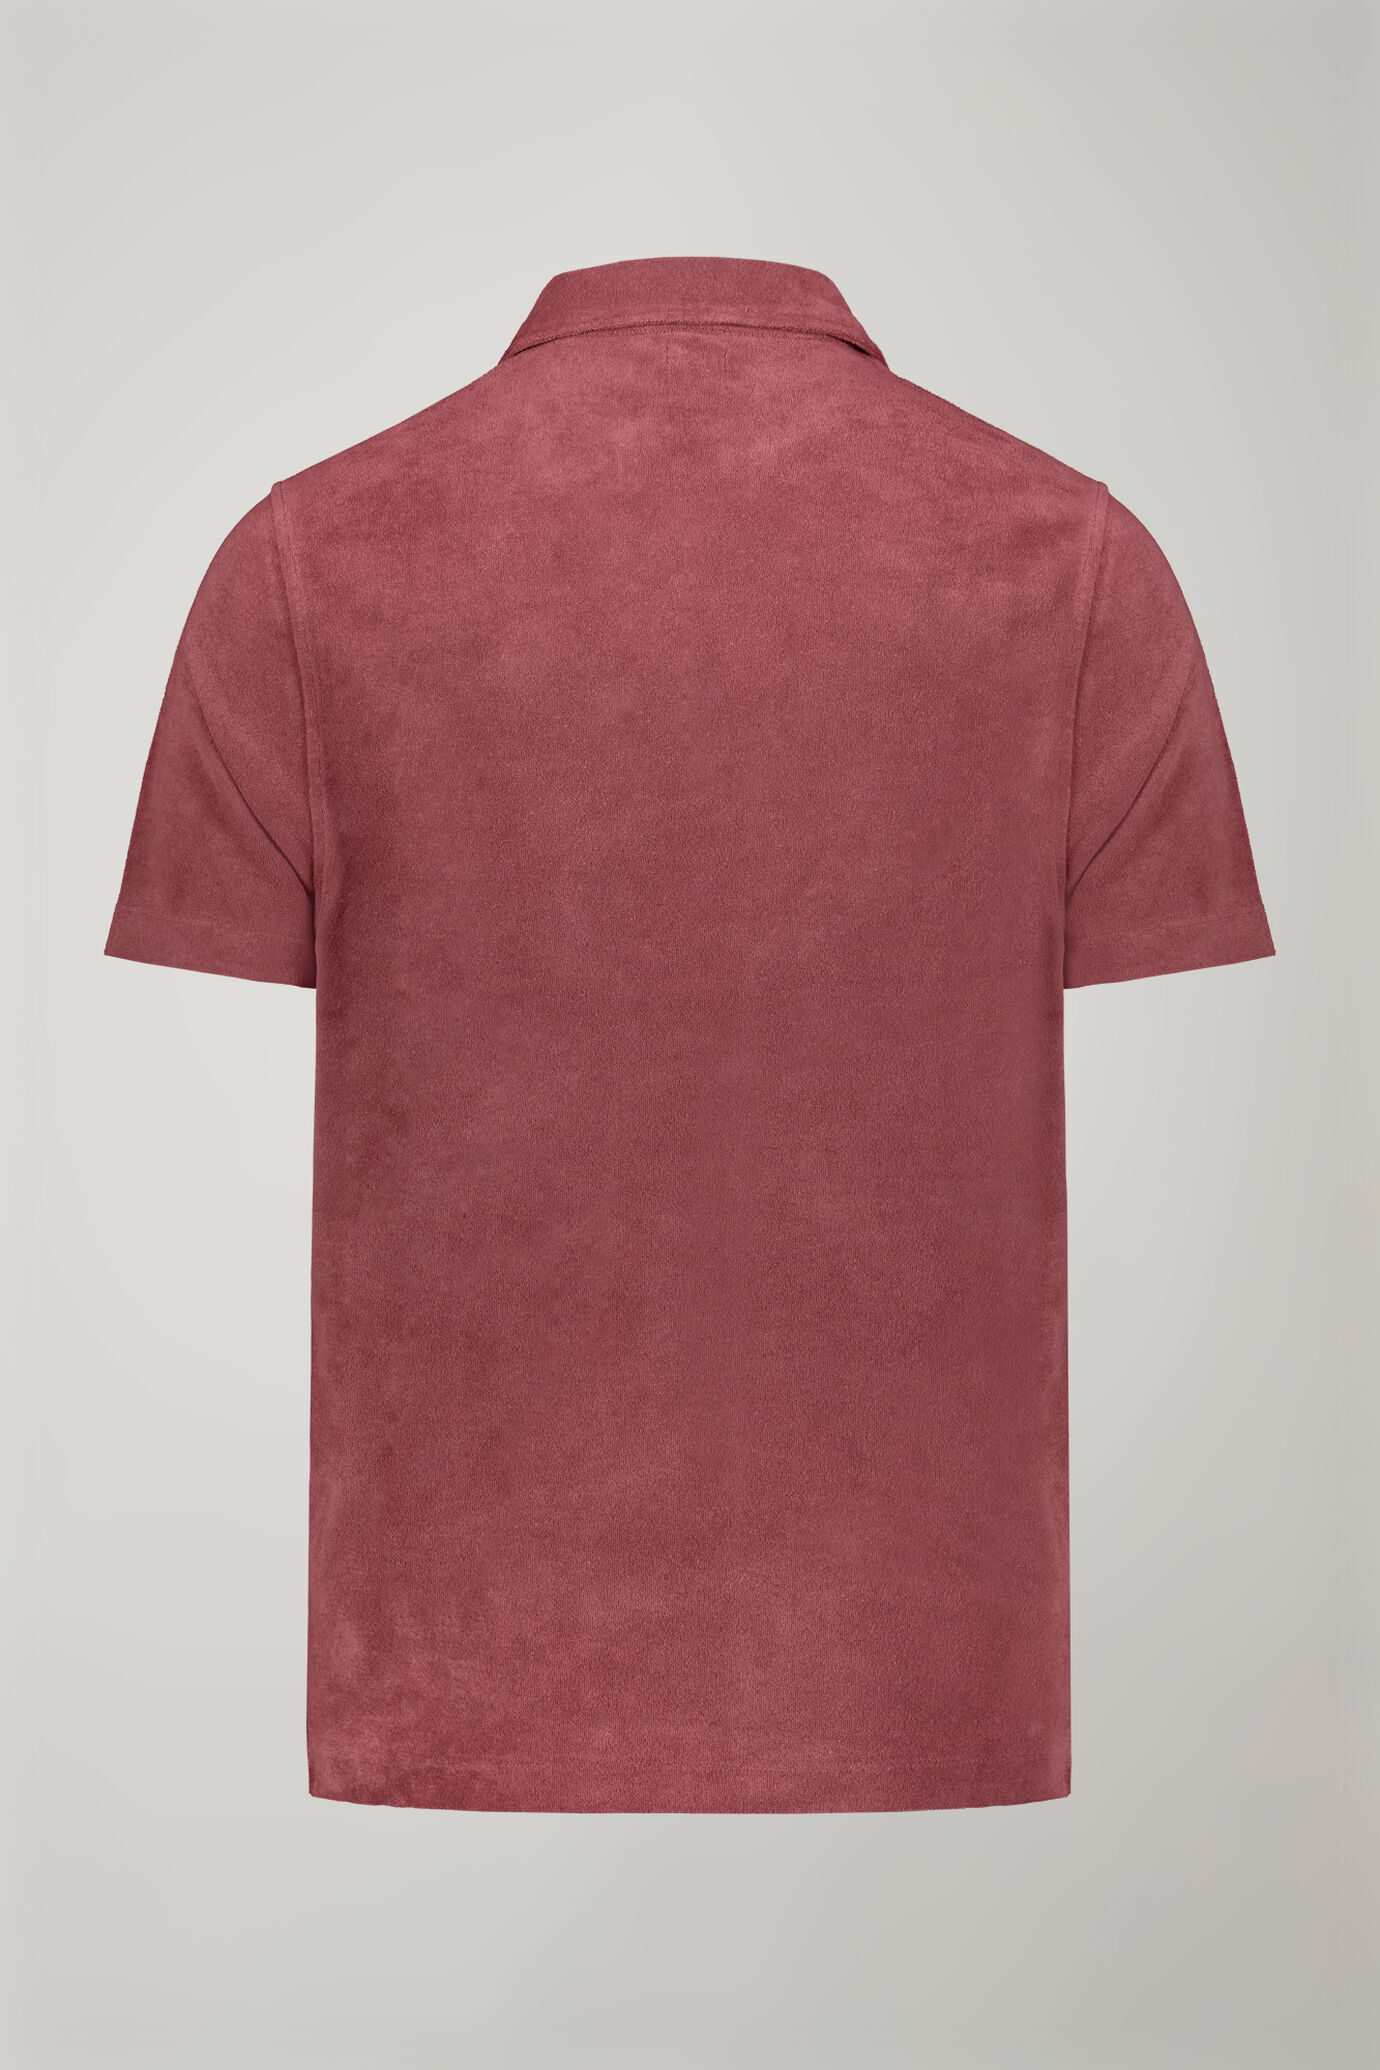 Kurzärmeliges Herren-Poloshirt mit Derby-Kragen aus Frottee in normaler Passform image number 5